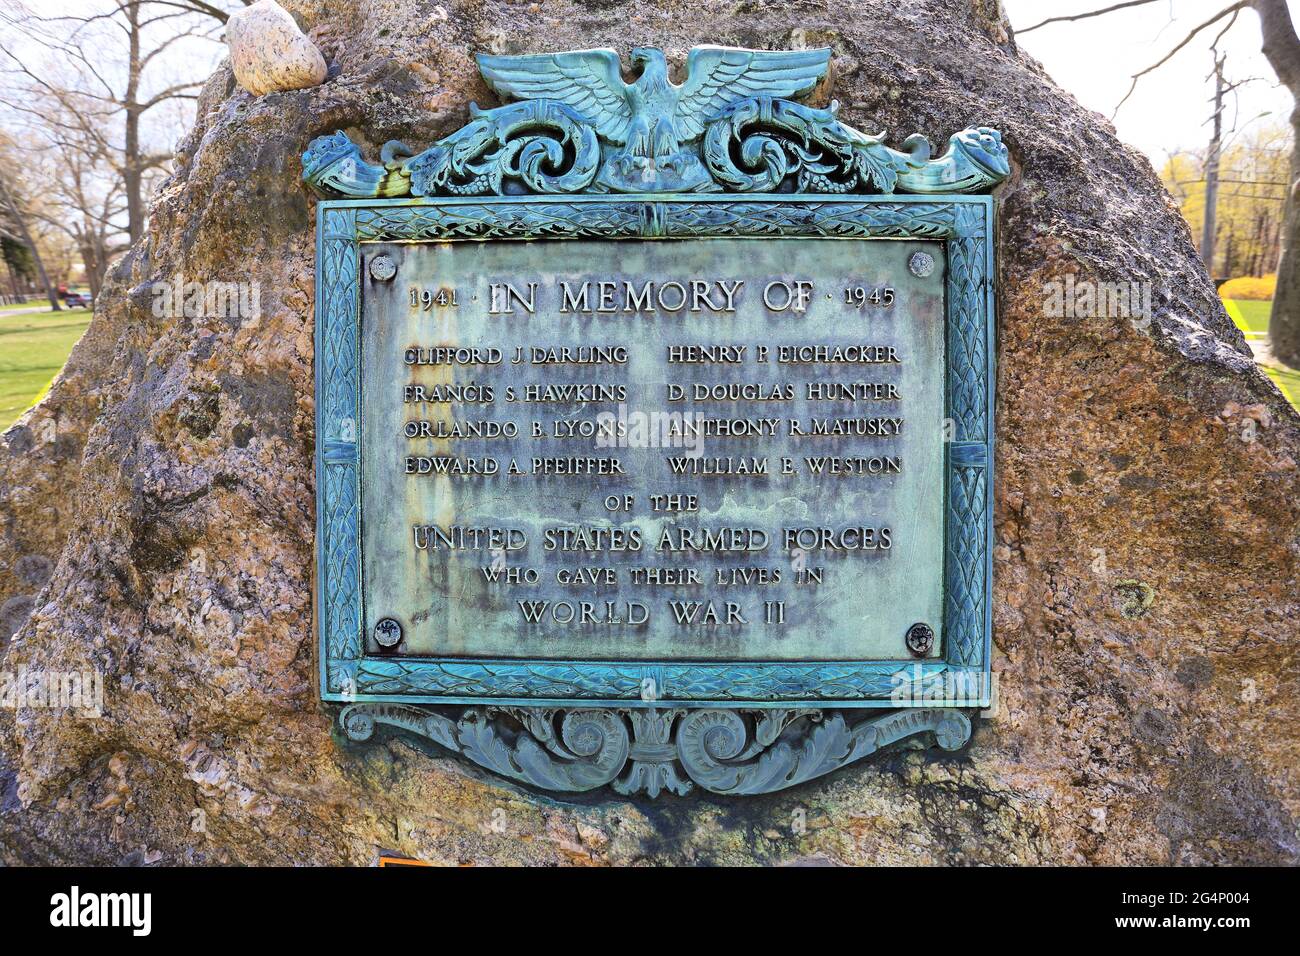 World War 2 memorial plaque Setauket Long Island New York Stock Photo